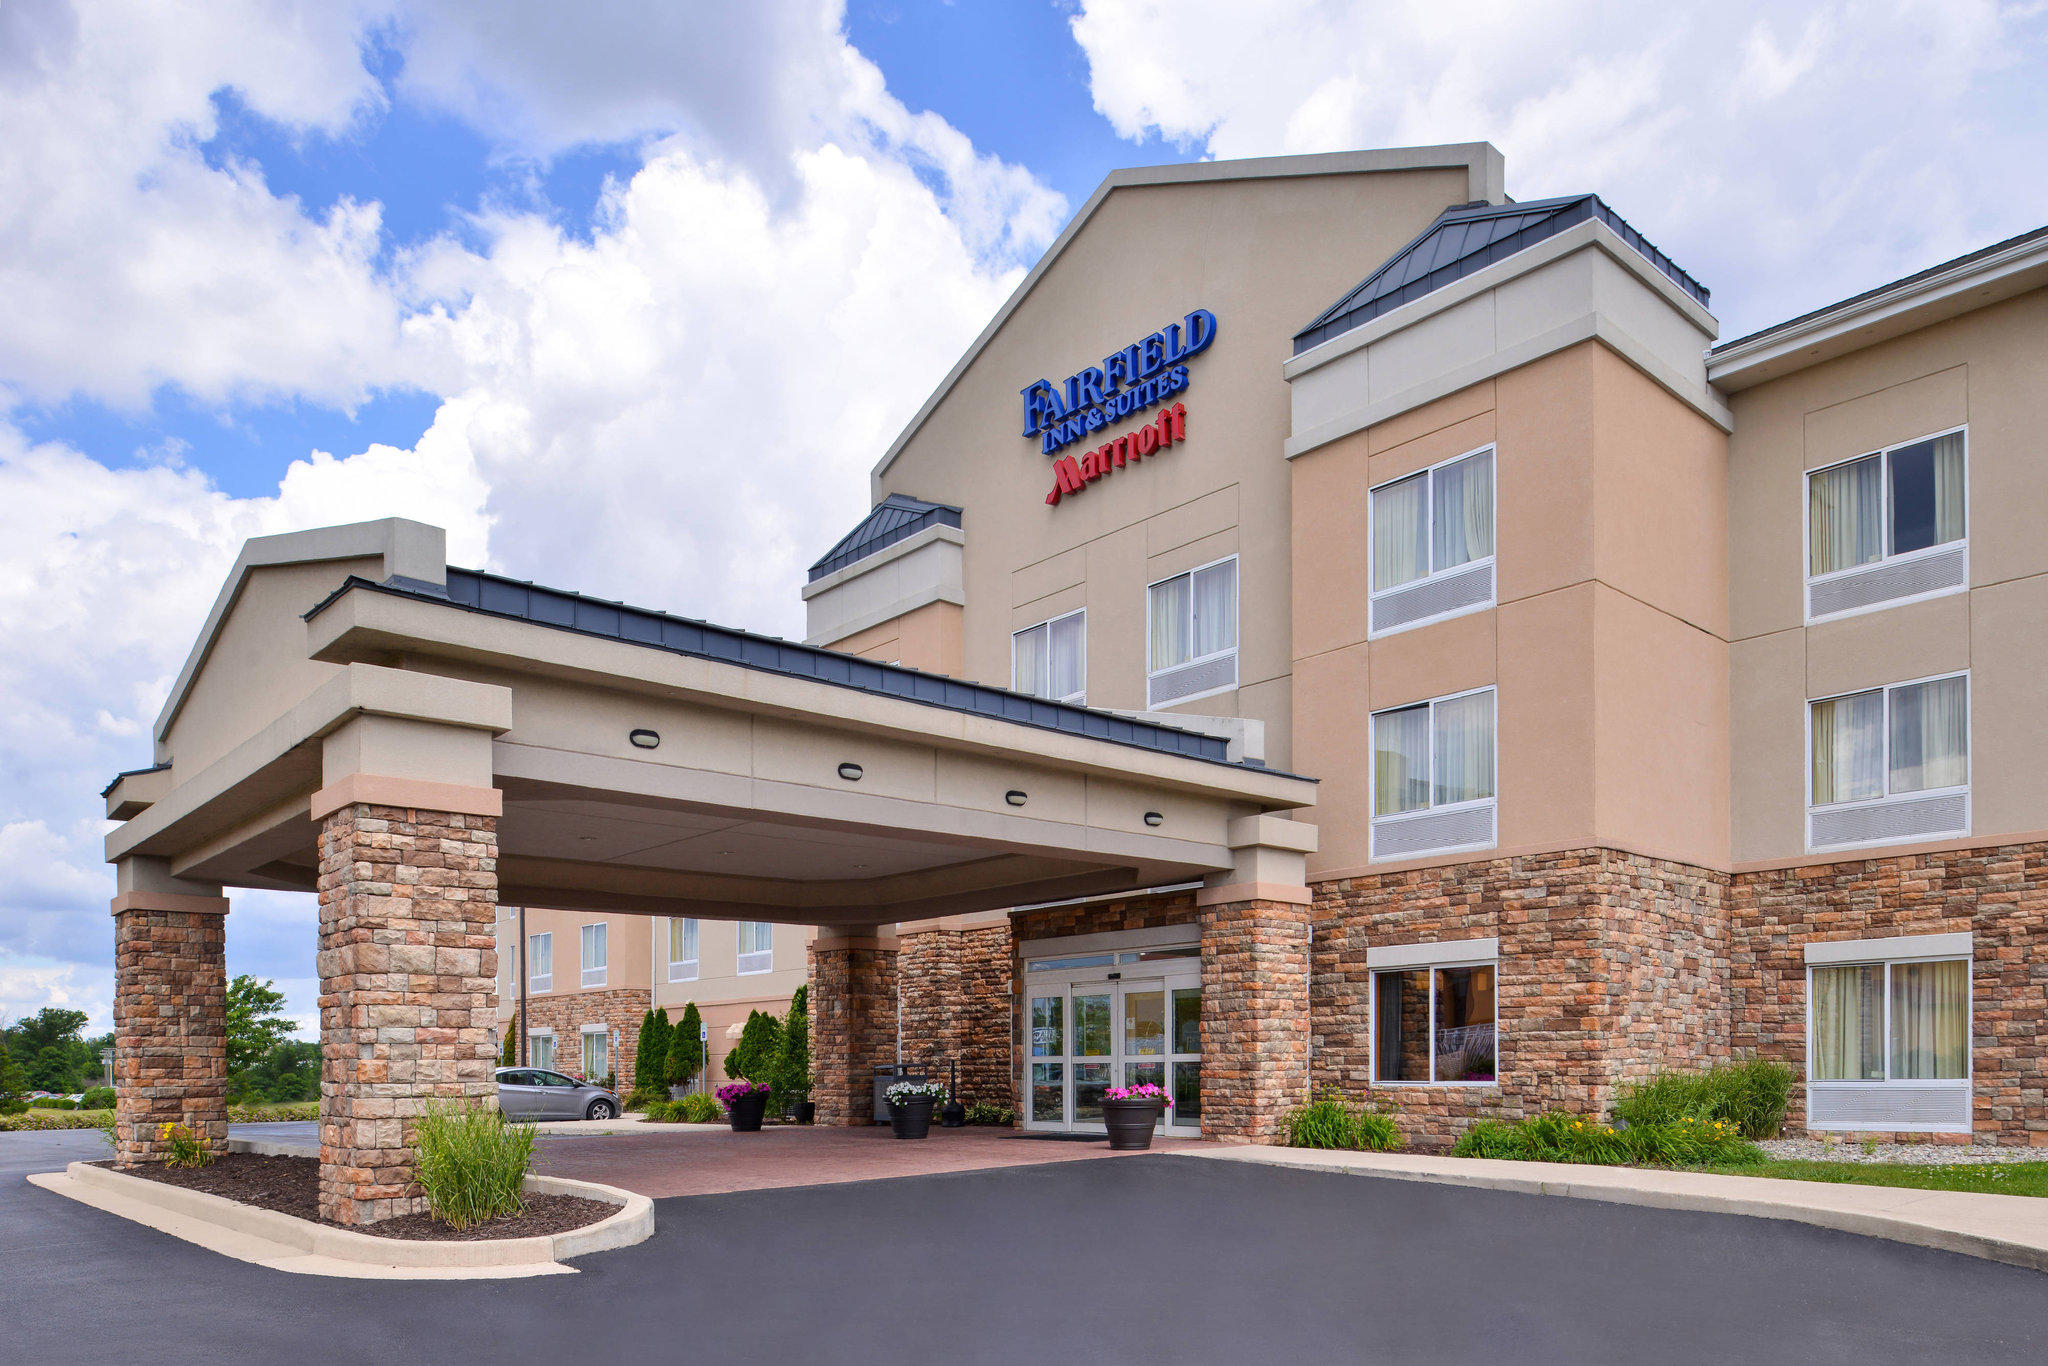 Fairfield Inn & Suites by Marriott Fort Wayne Photo